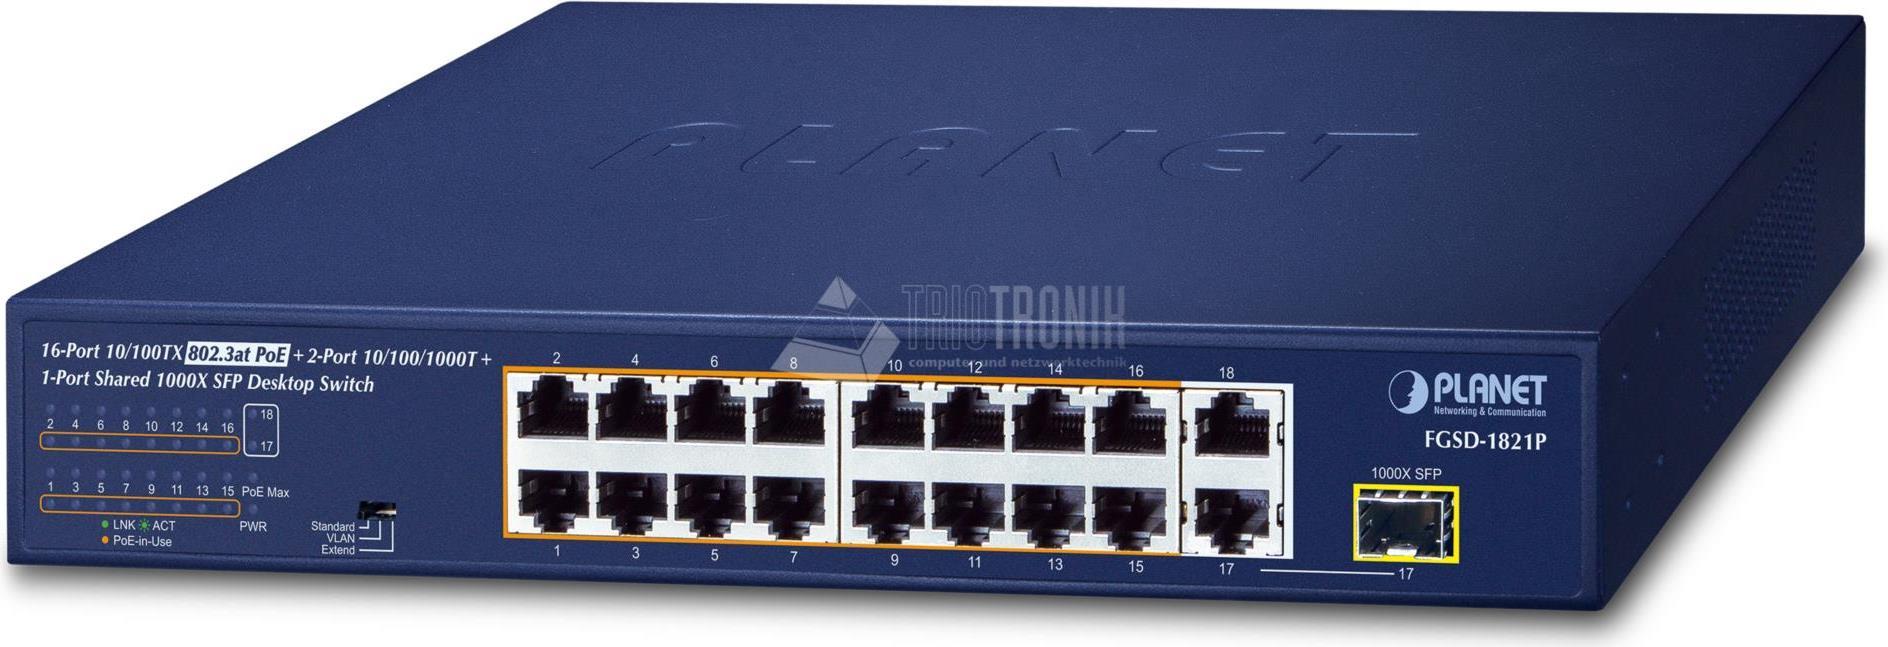 PLANET 16-Port 10/100TX 802.3at PoE Unmanaged Fast Ethernet (10/100) Power over Ethernet (PoE) 1U Blau (FGSD-1821P) von Planet